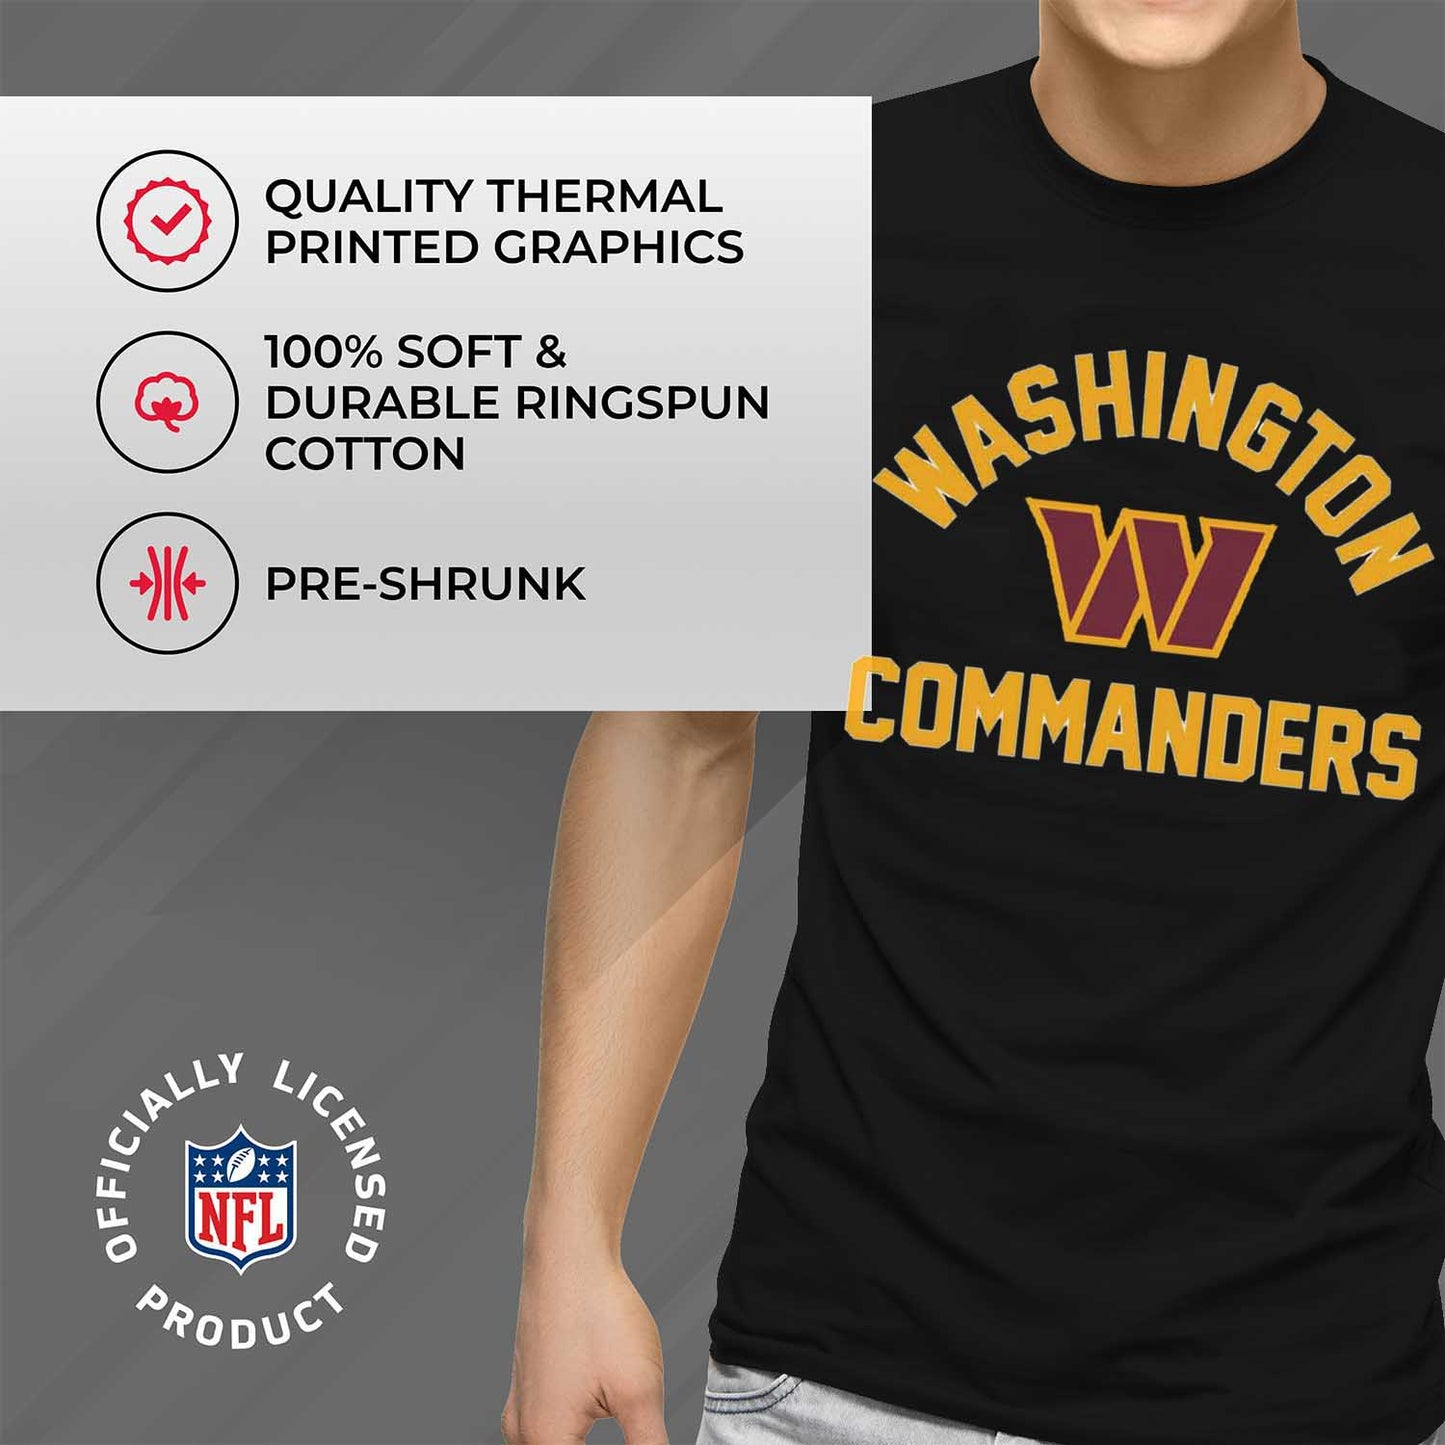 Washington Commanders NFL Adult Gameday T-Shirt - Black